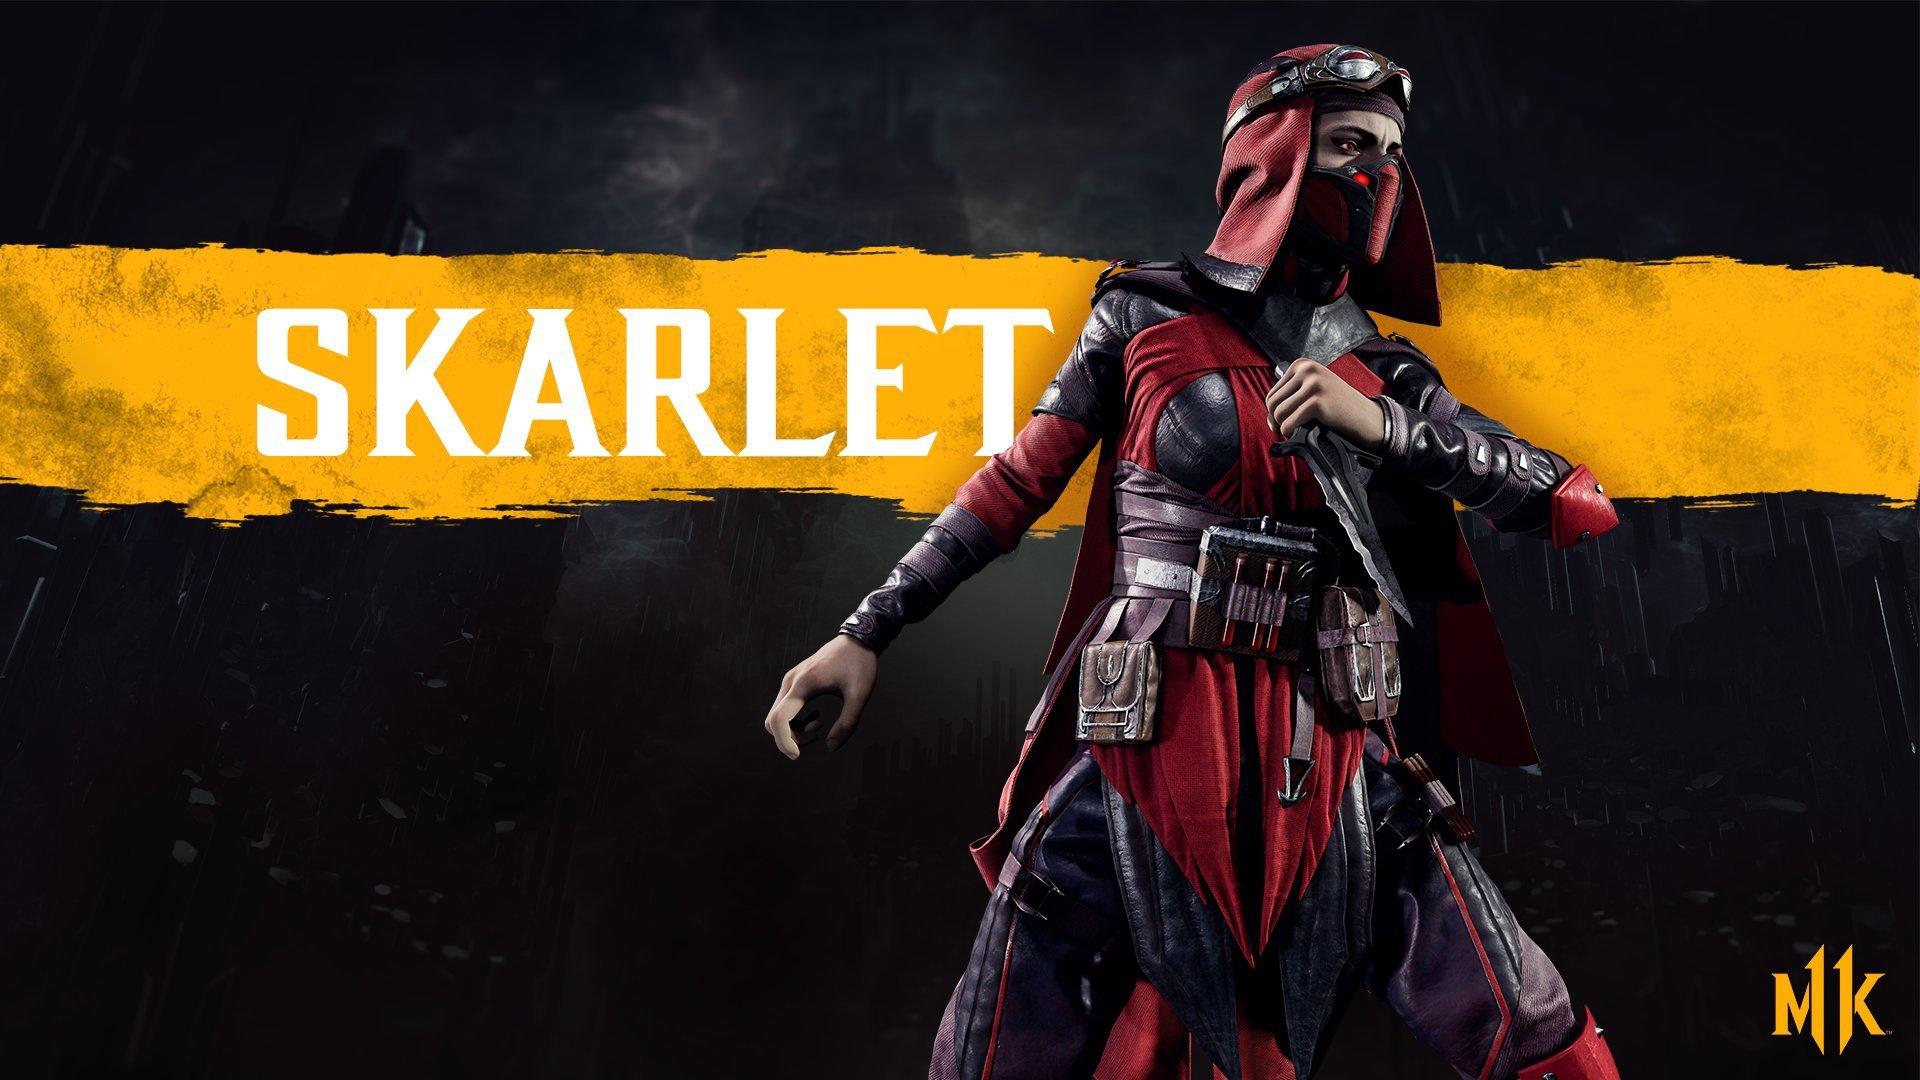 Skarlet (Mortal Kombat), Mortal Kombat 11